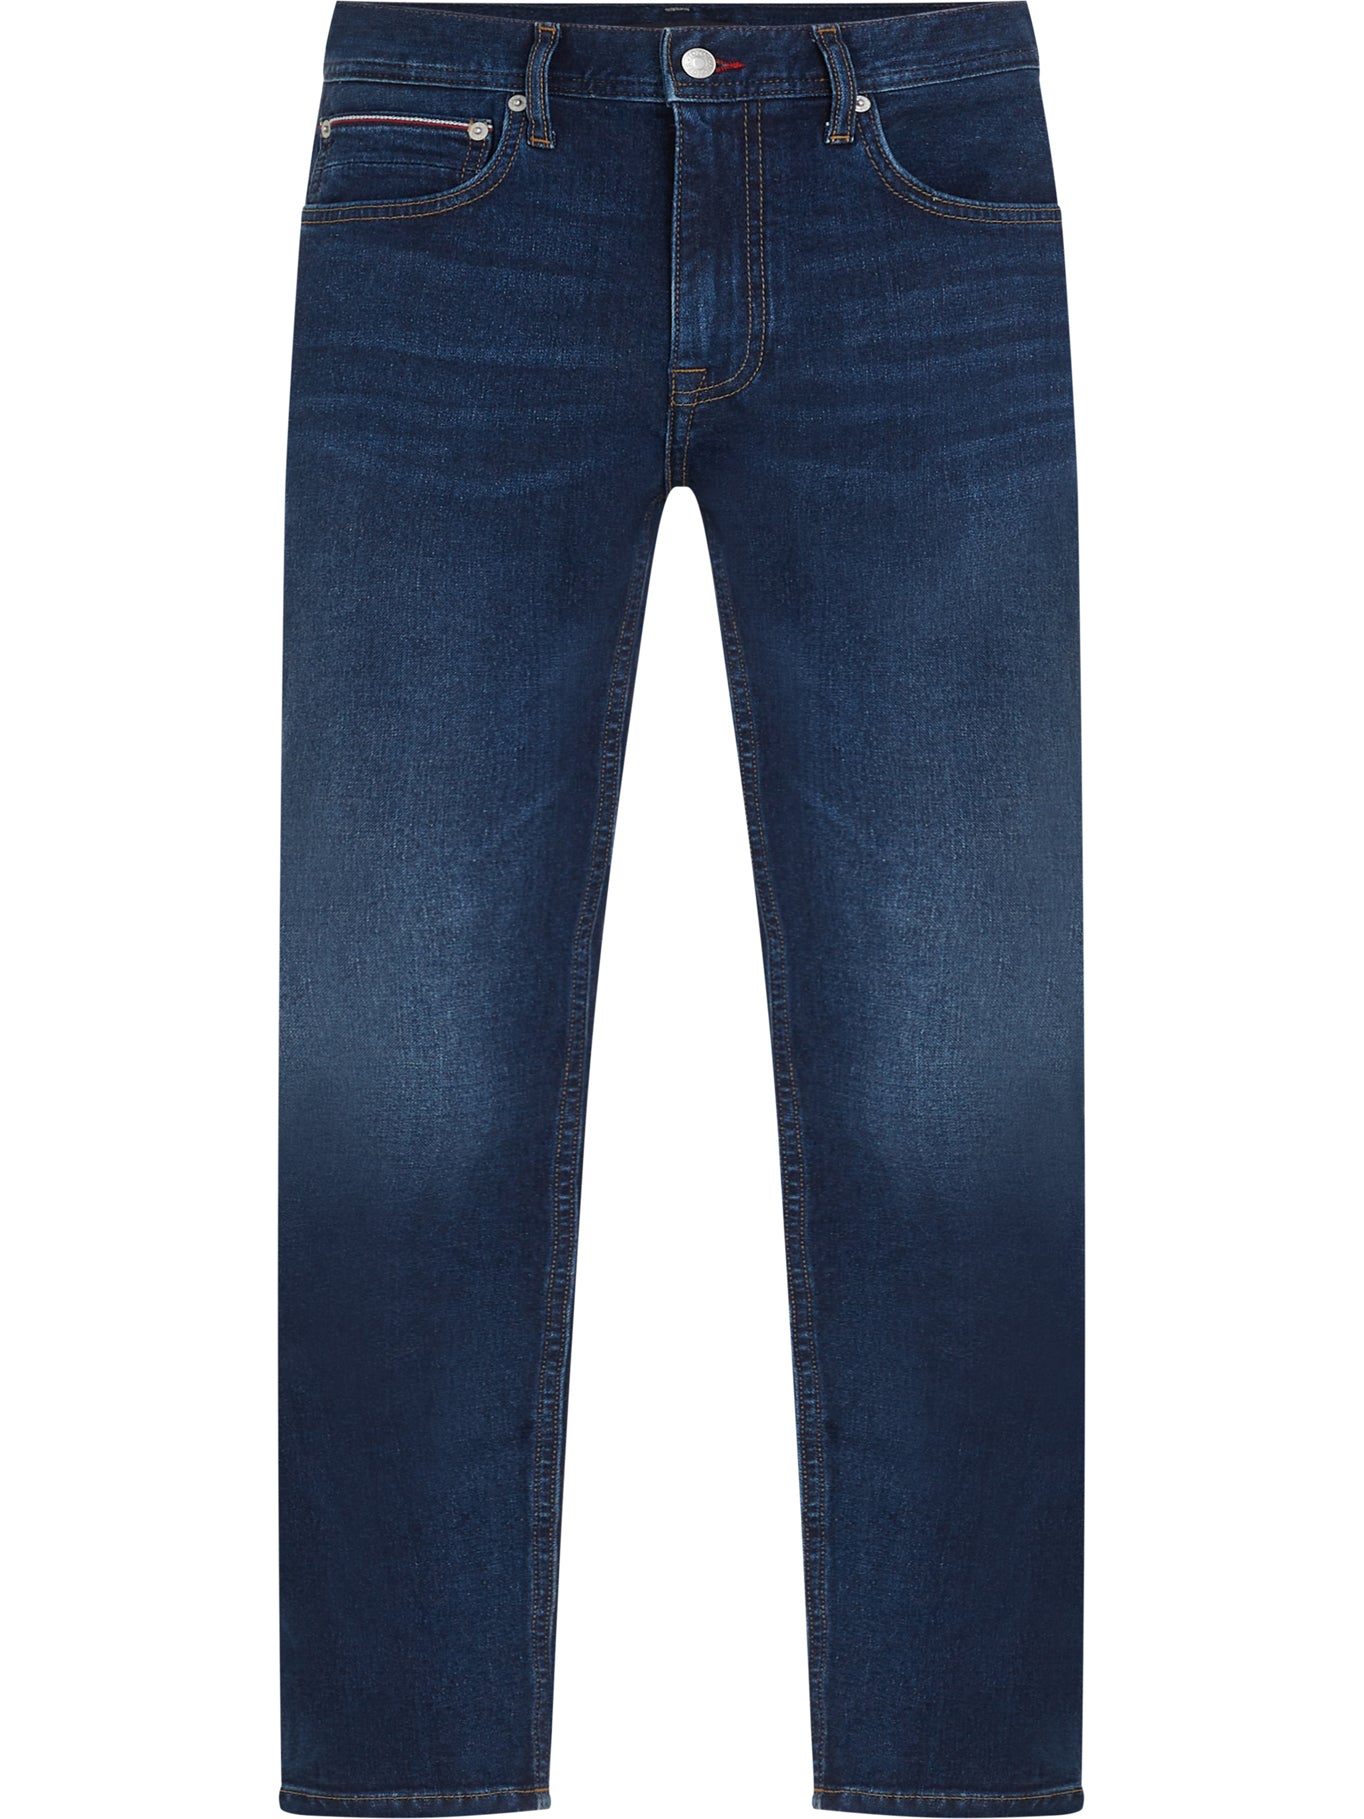 pantalon-jeans-tommy-hilfiger-p-caballeros-5